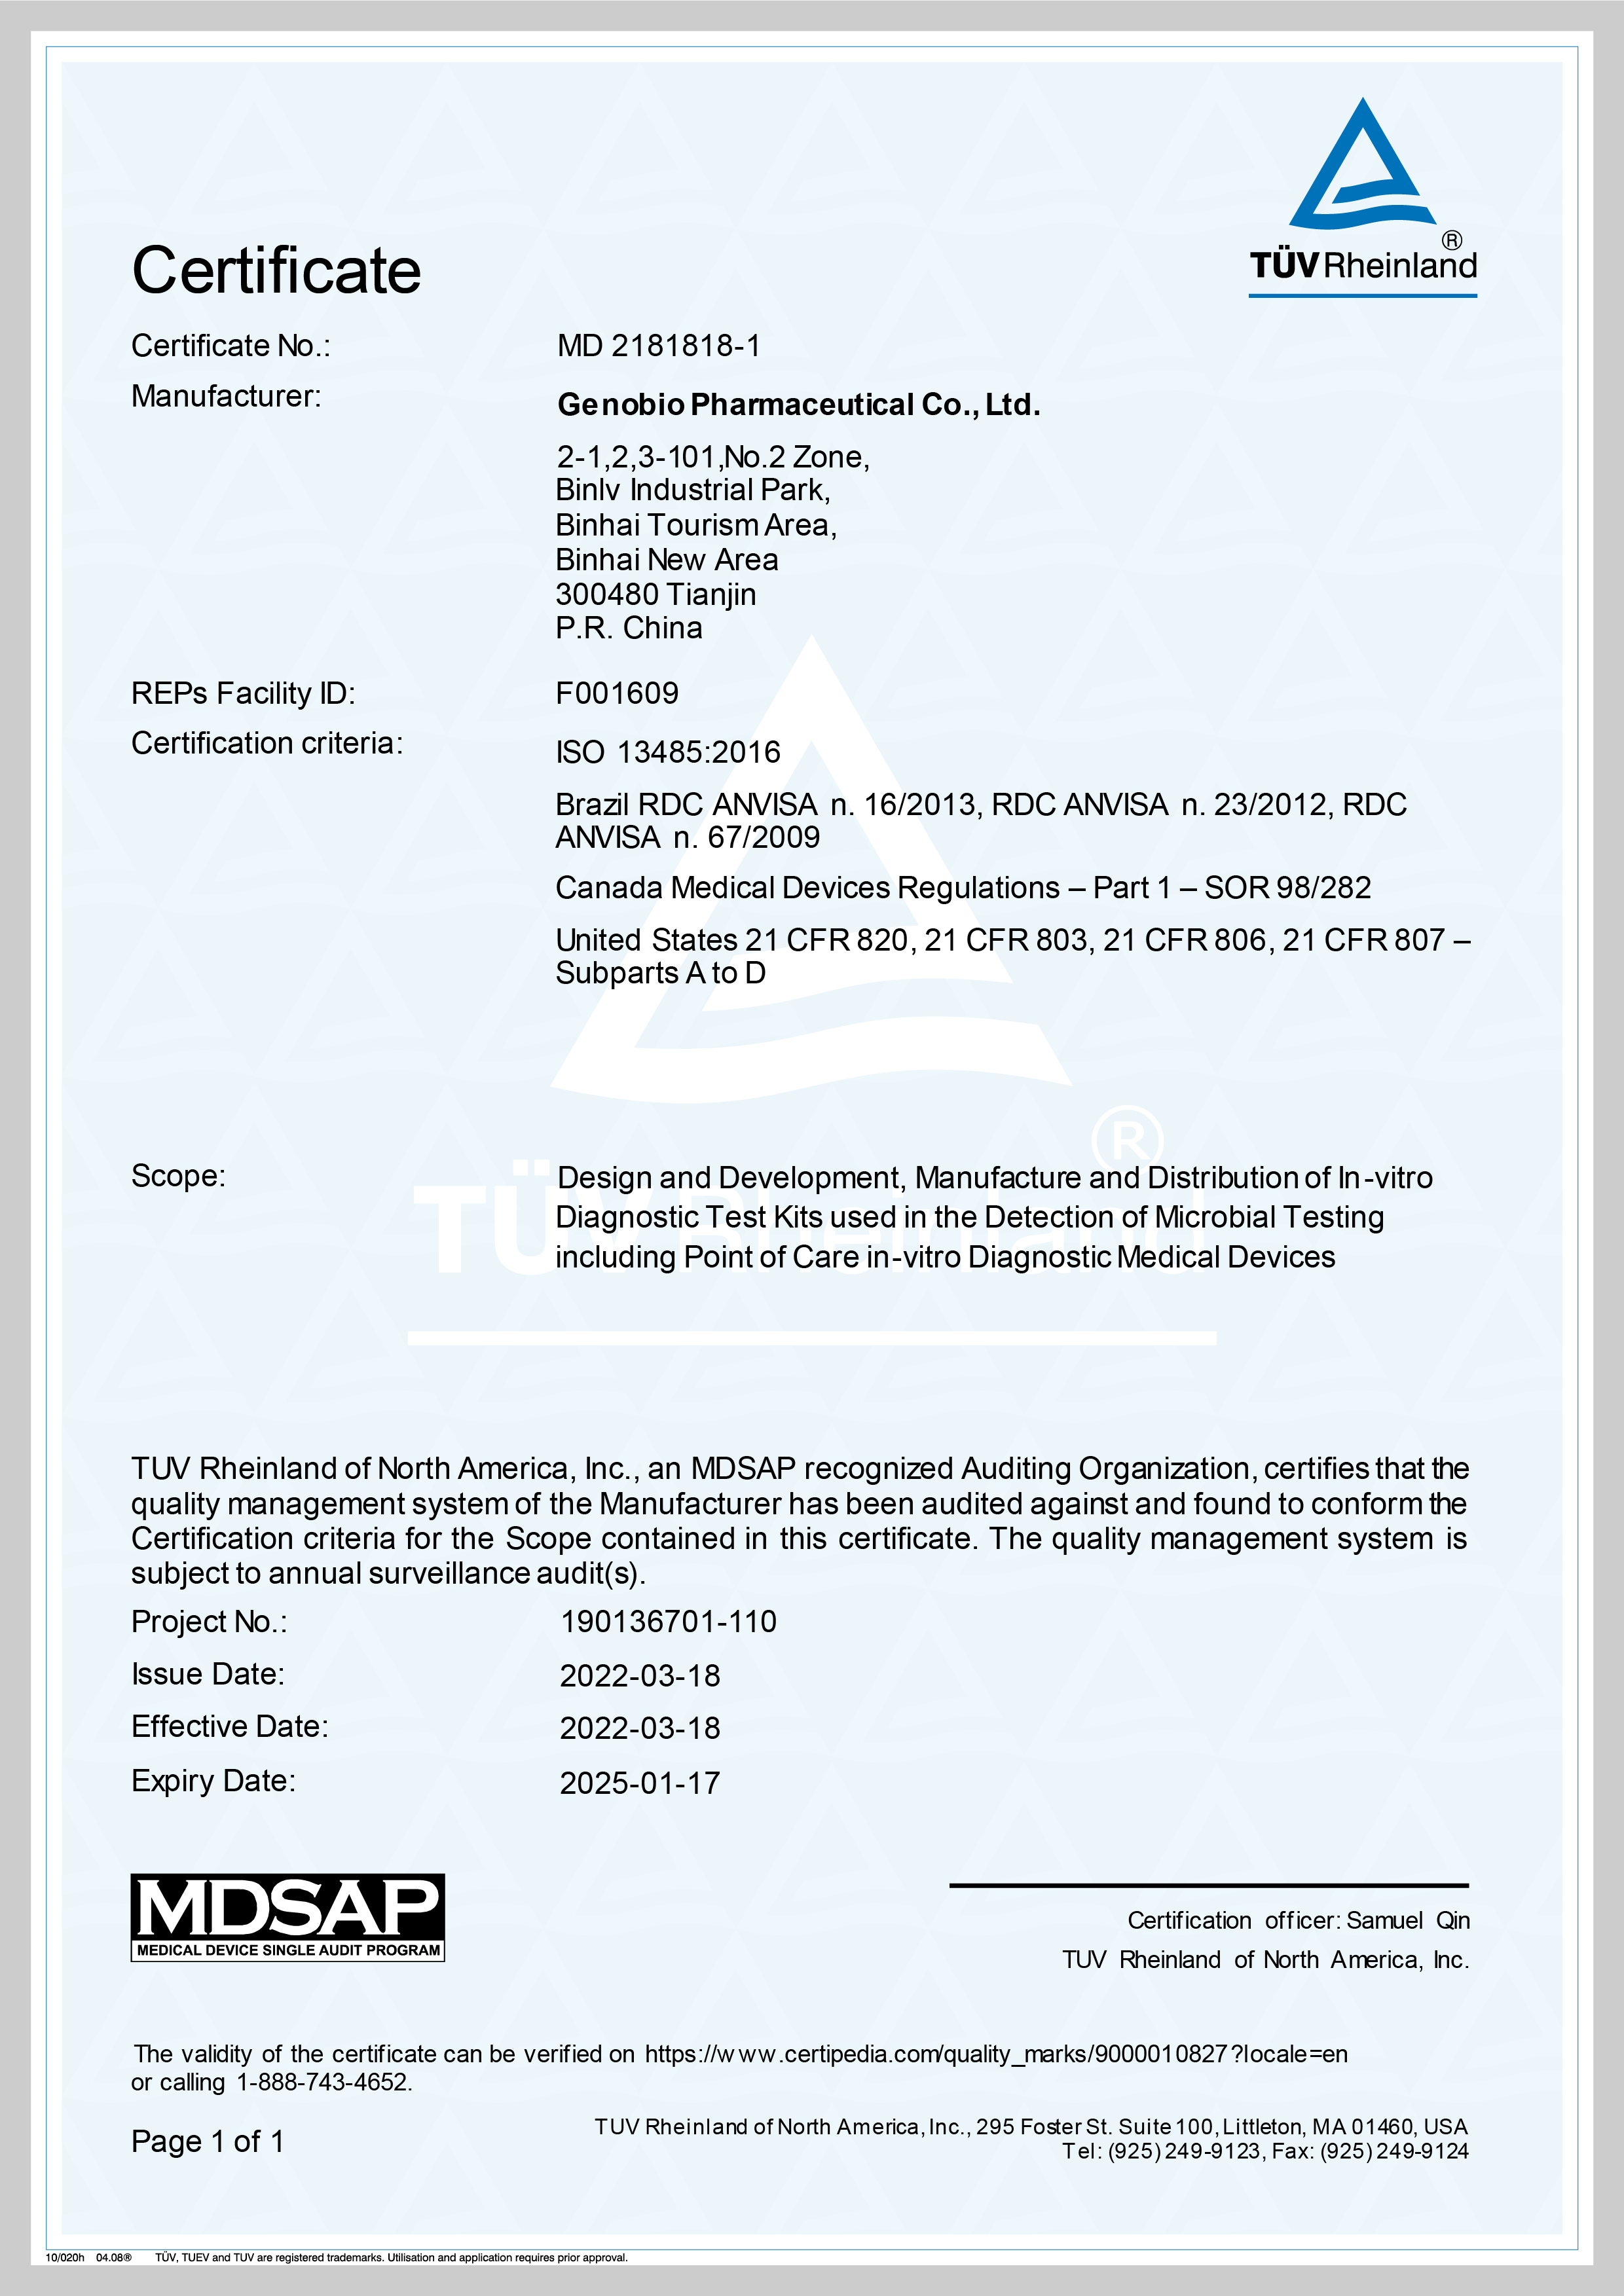 Genobio accipit MDSAP Certification - Altissimum Regulatory Standard in Medical Fabrica Vestibulum Industry